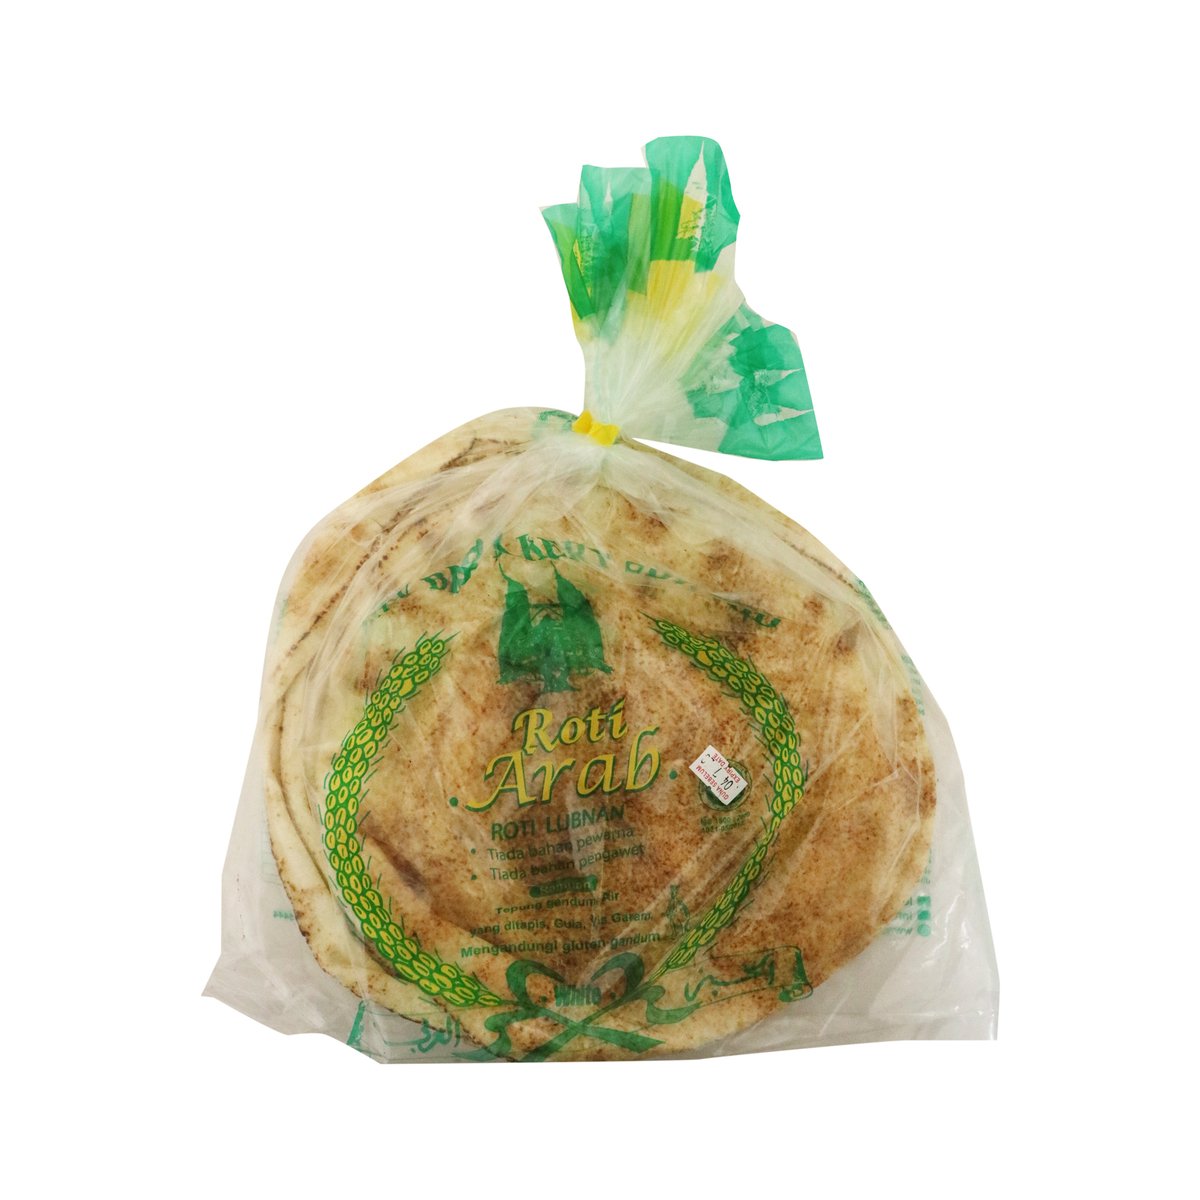 Early Bird Lebannese Bread 300g